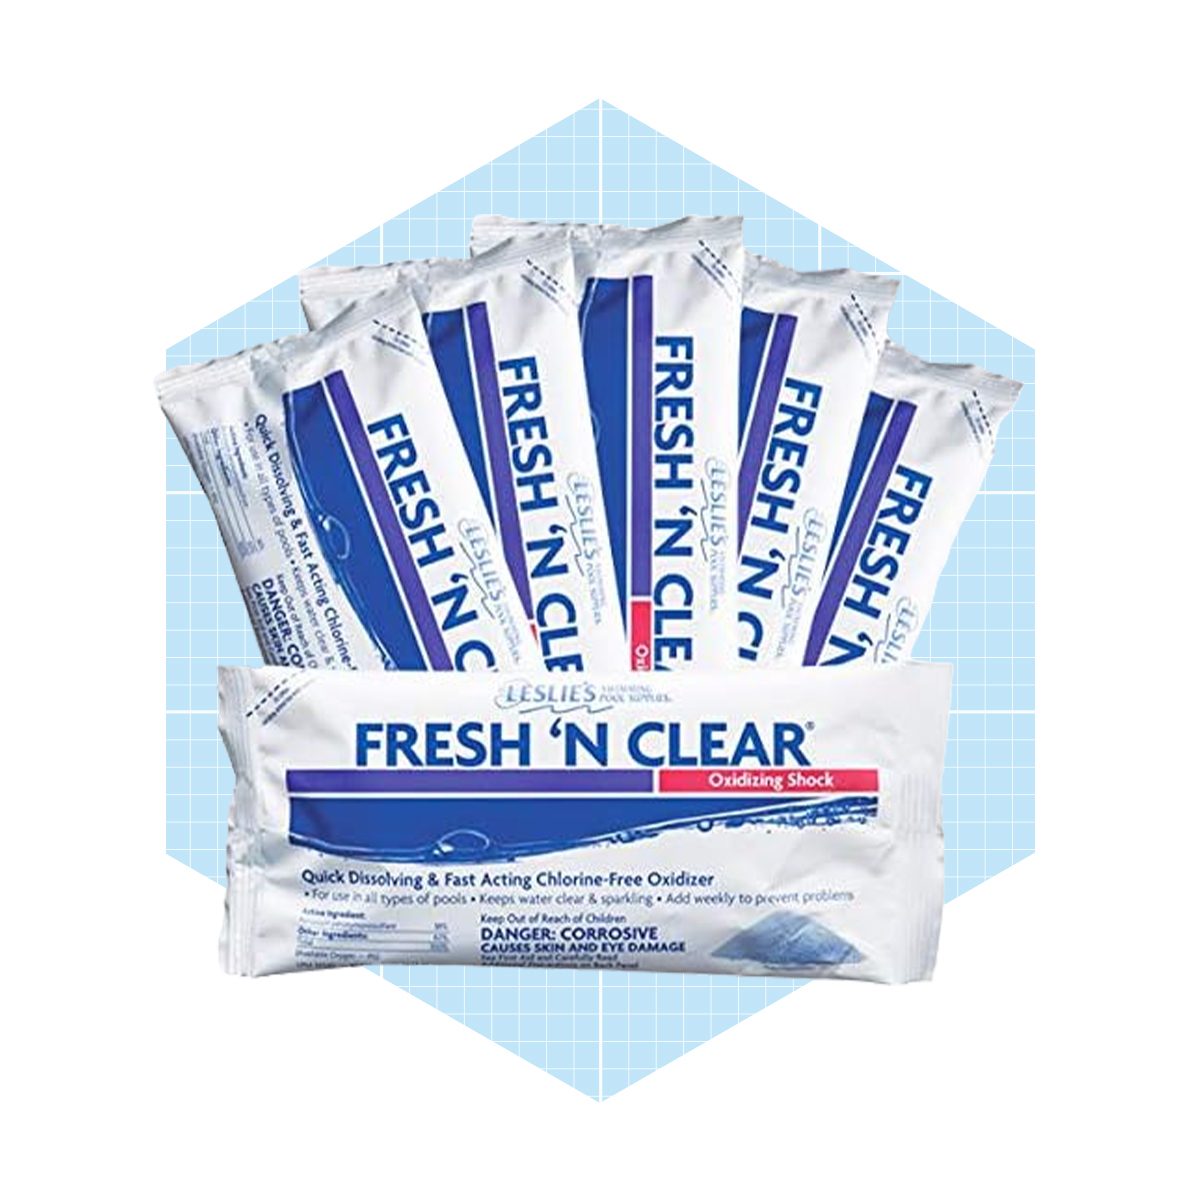 Leslie's Fresh 'n Clear Non Chlorine Oxidizing Pool Shock